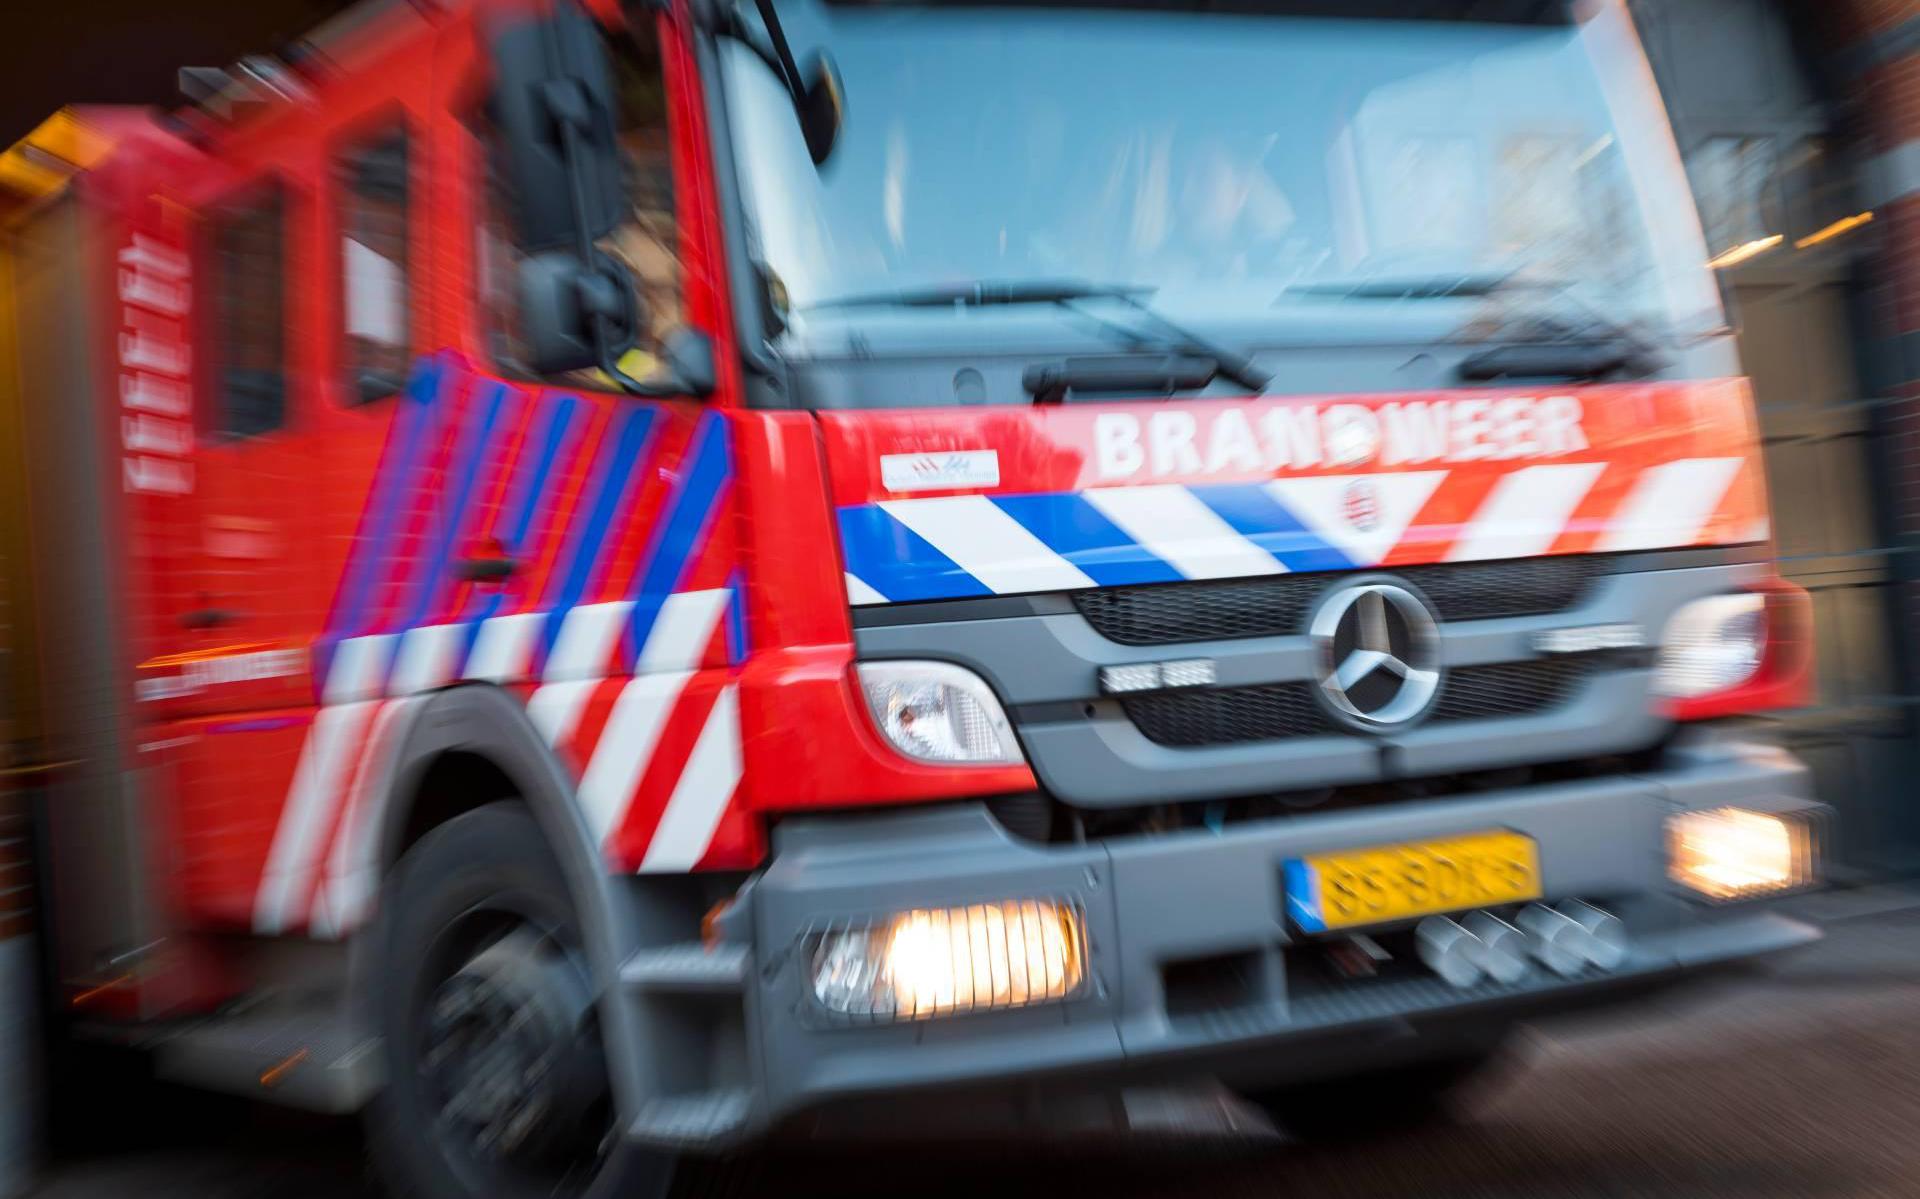 Woningen in Hoorn ontruimd vanwege brand in broodjeszaak